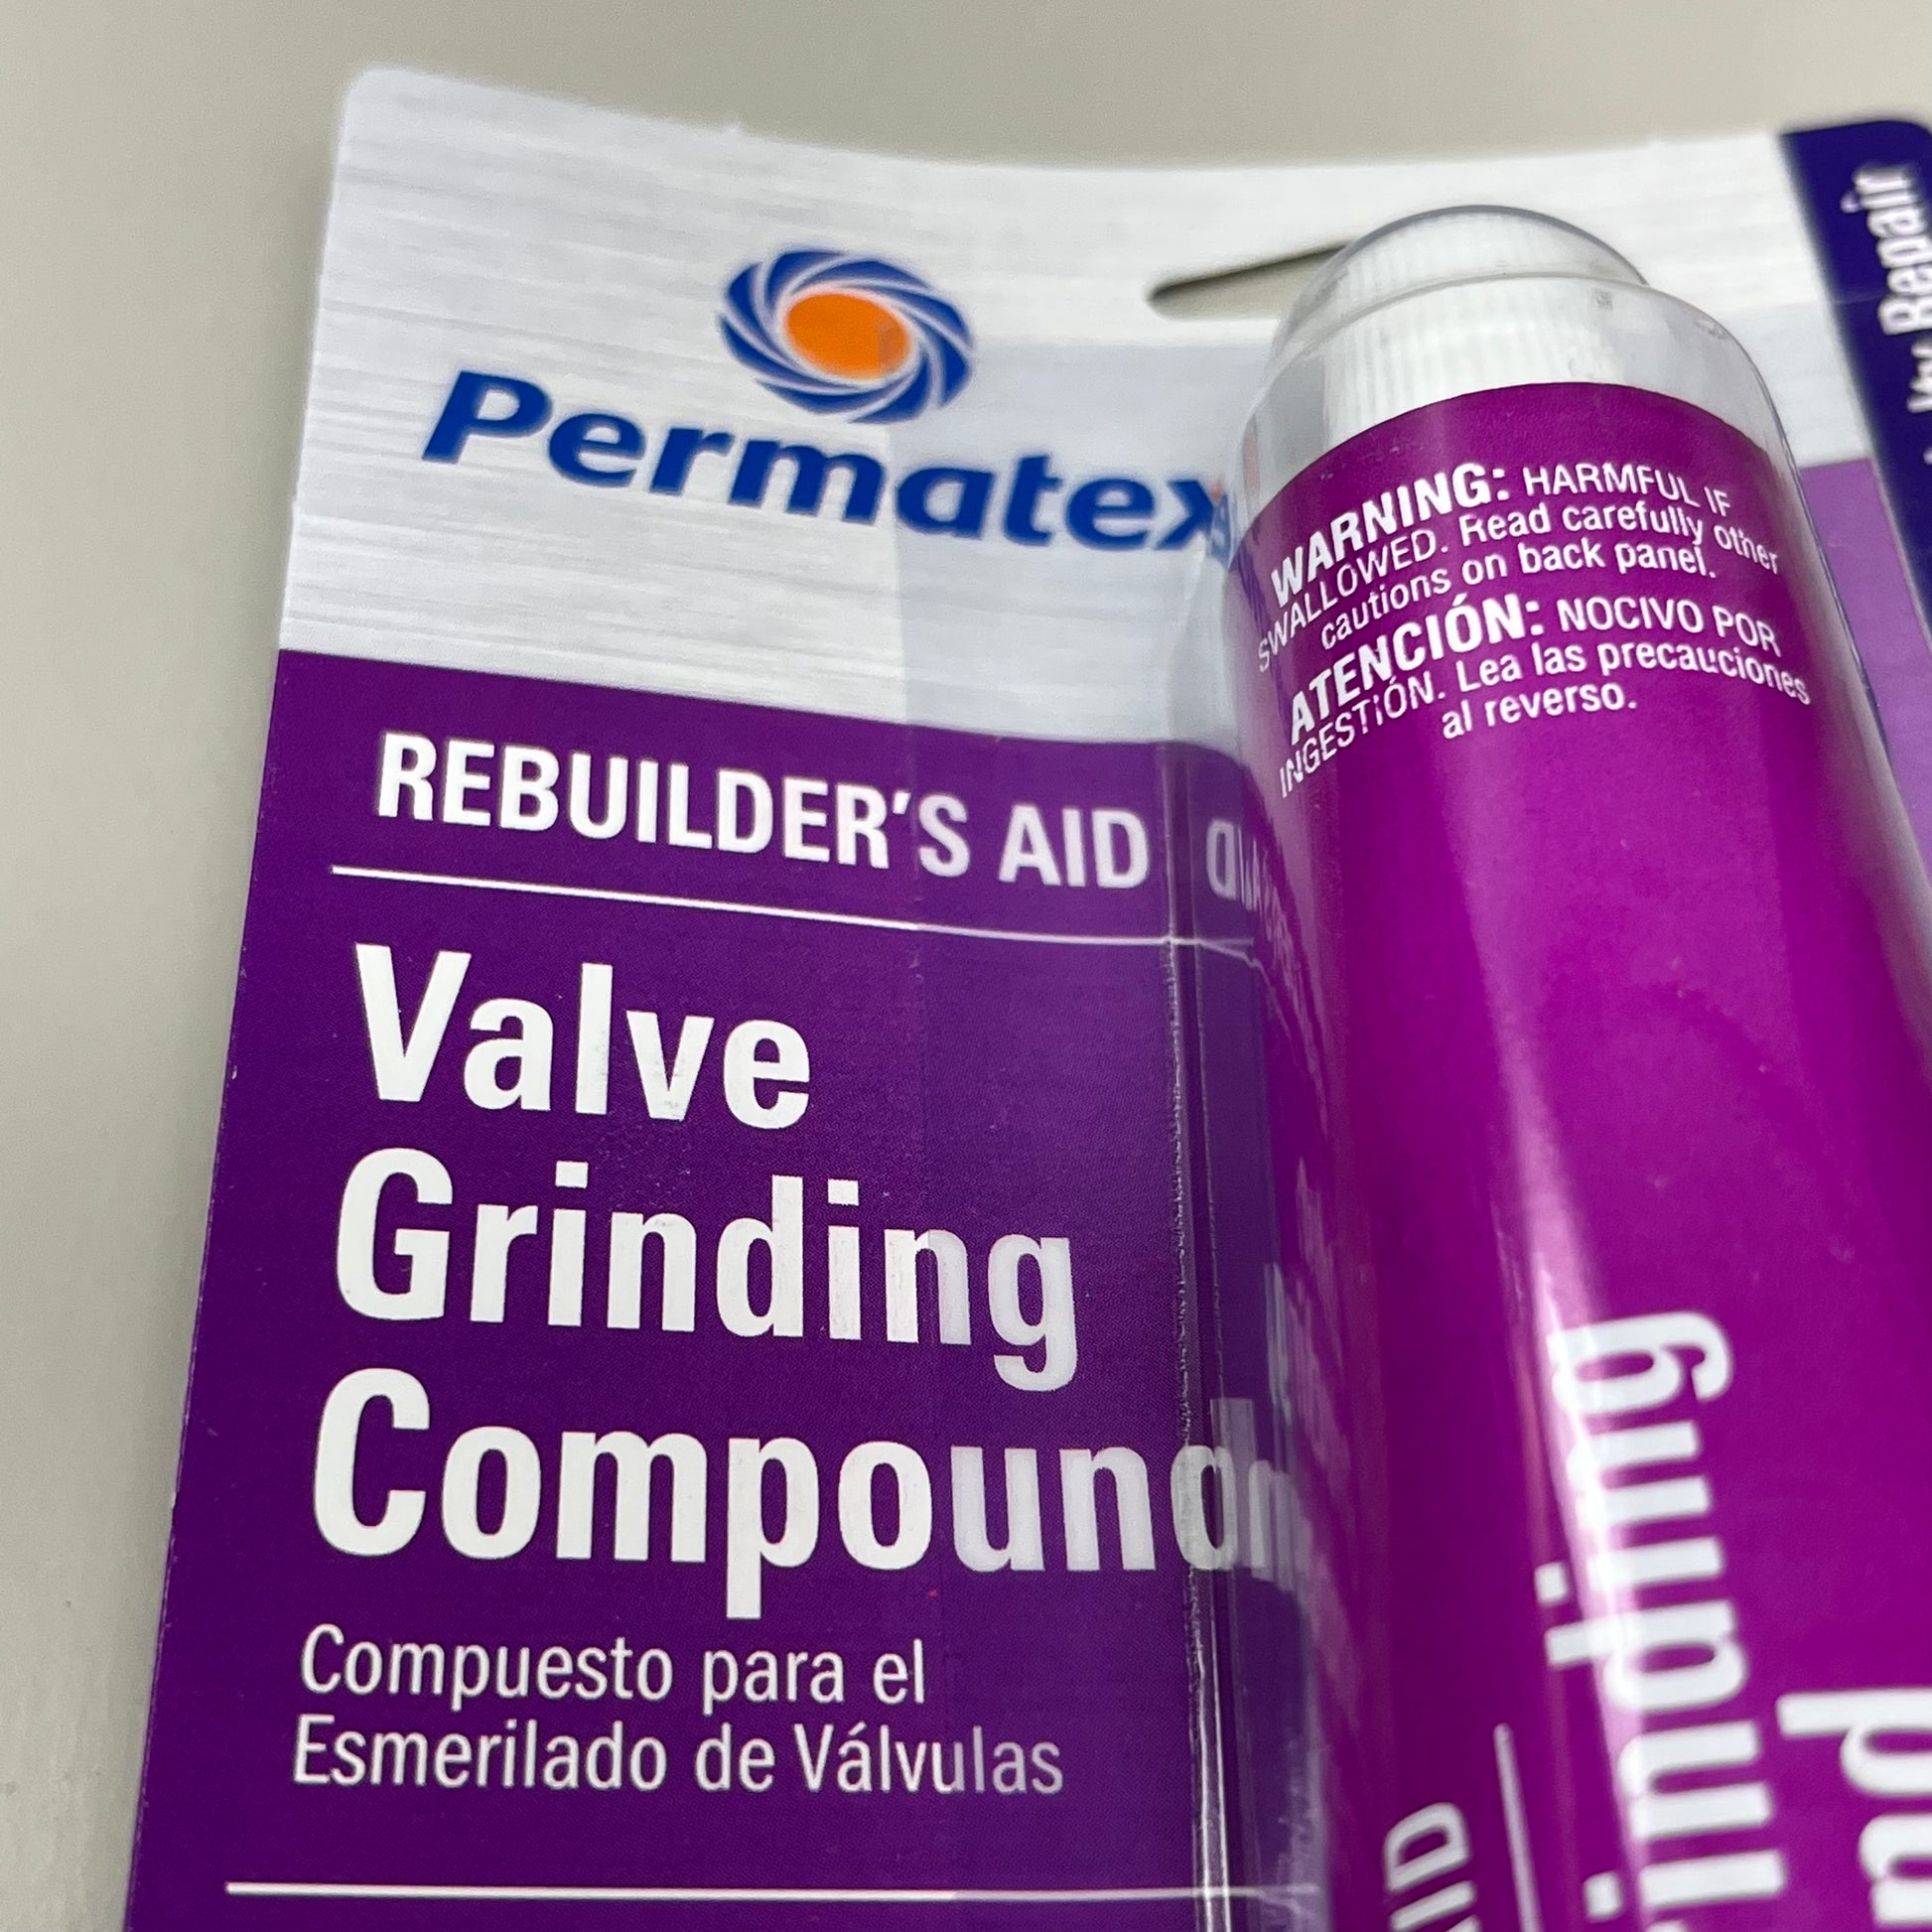 PERMATEX Valve Grinding Compound | Kimpex USA